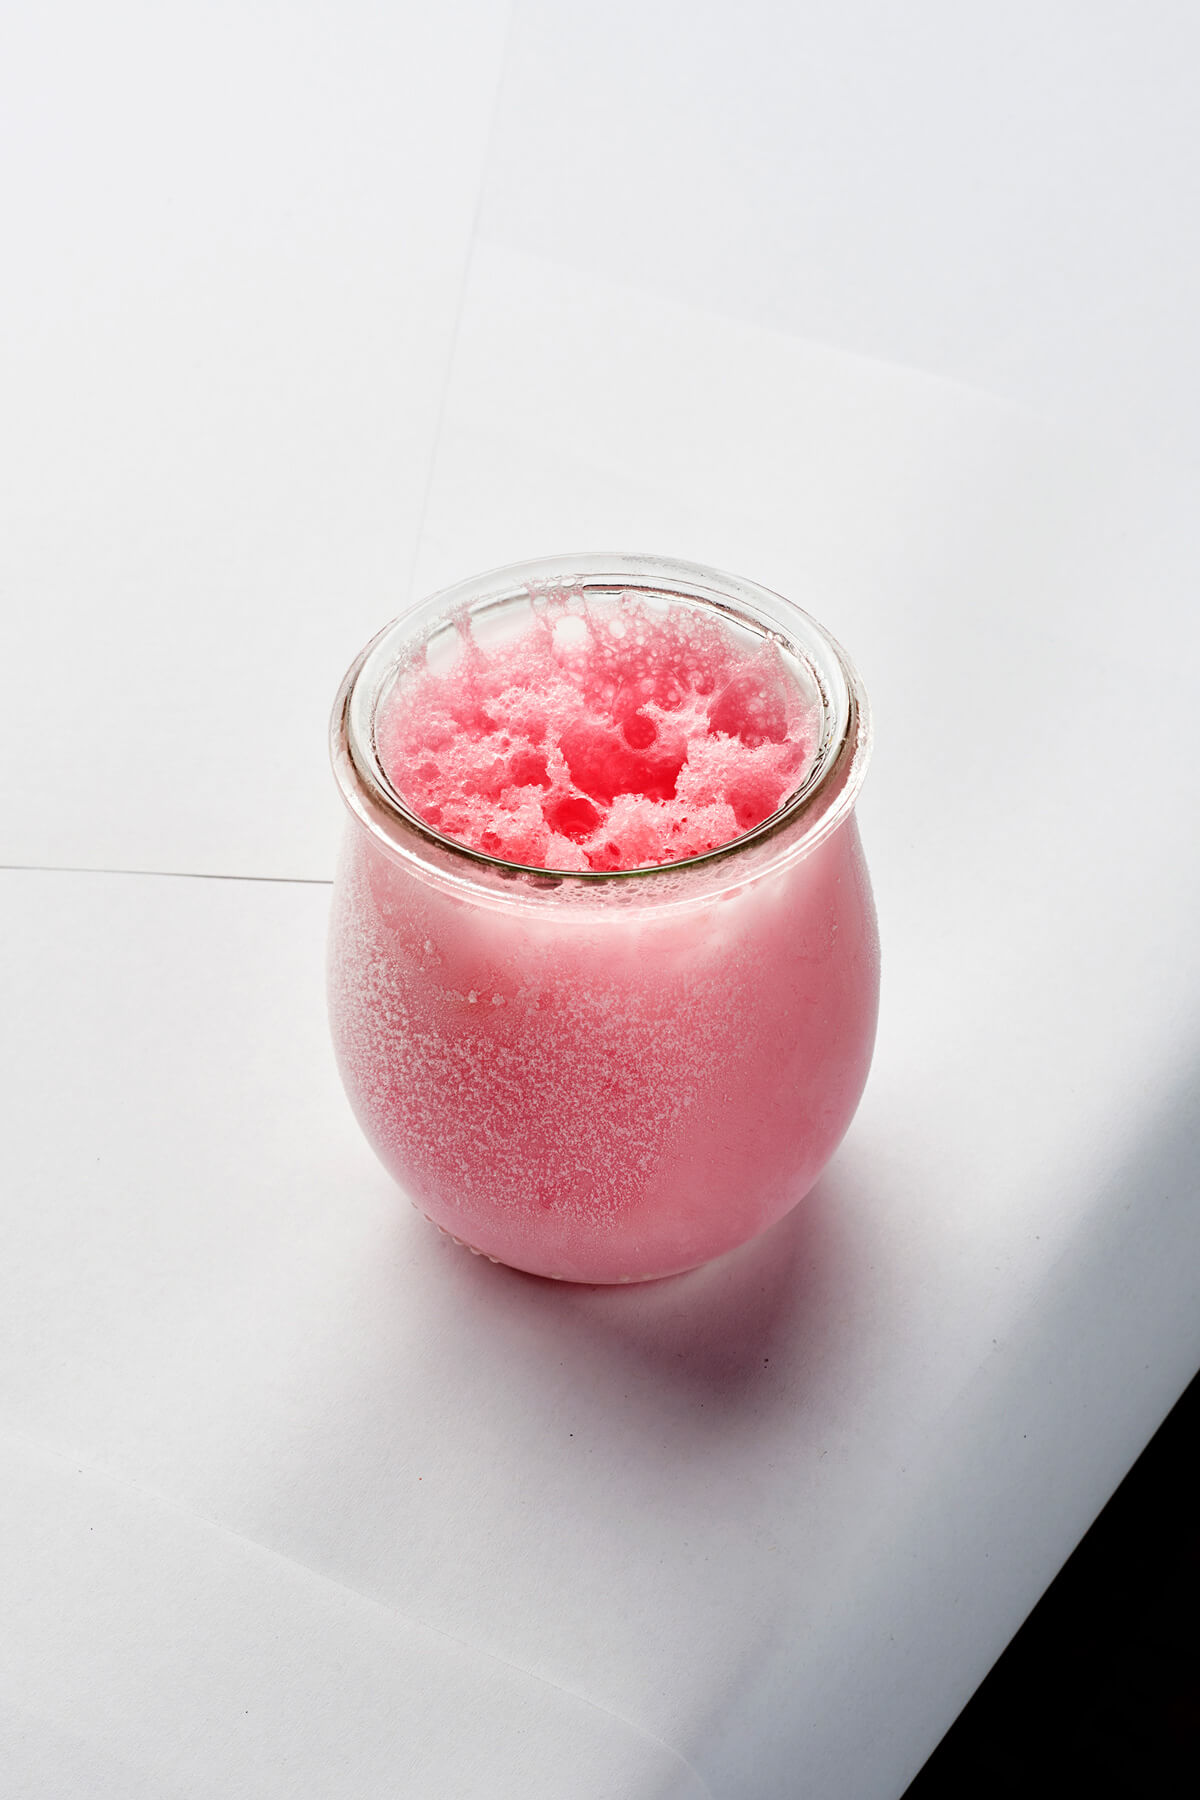 Steinbeisser Experimental Gastronomy - Rhubarb